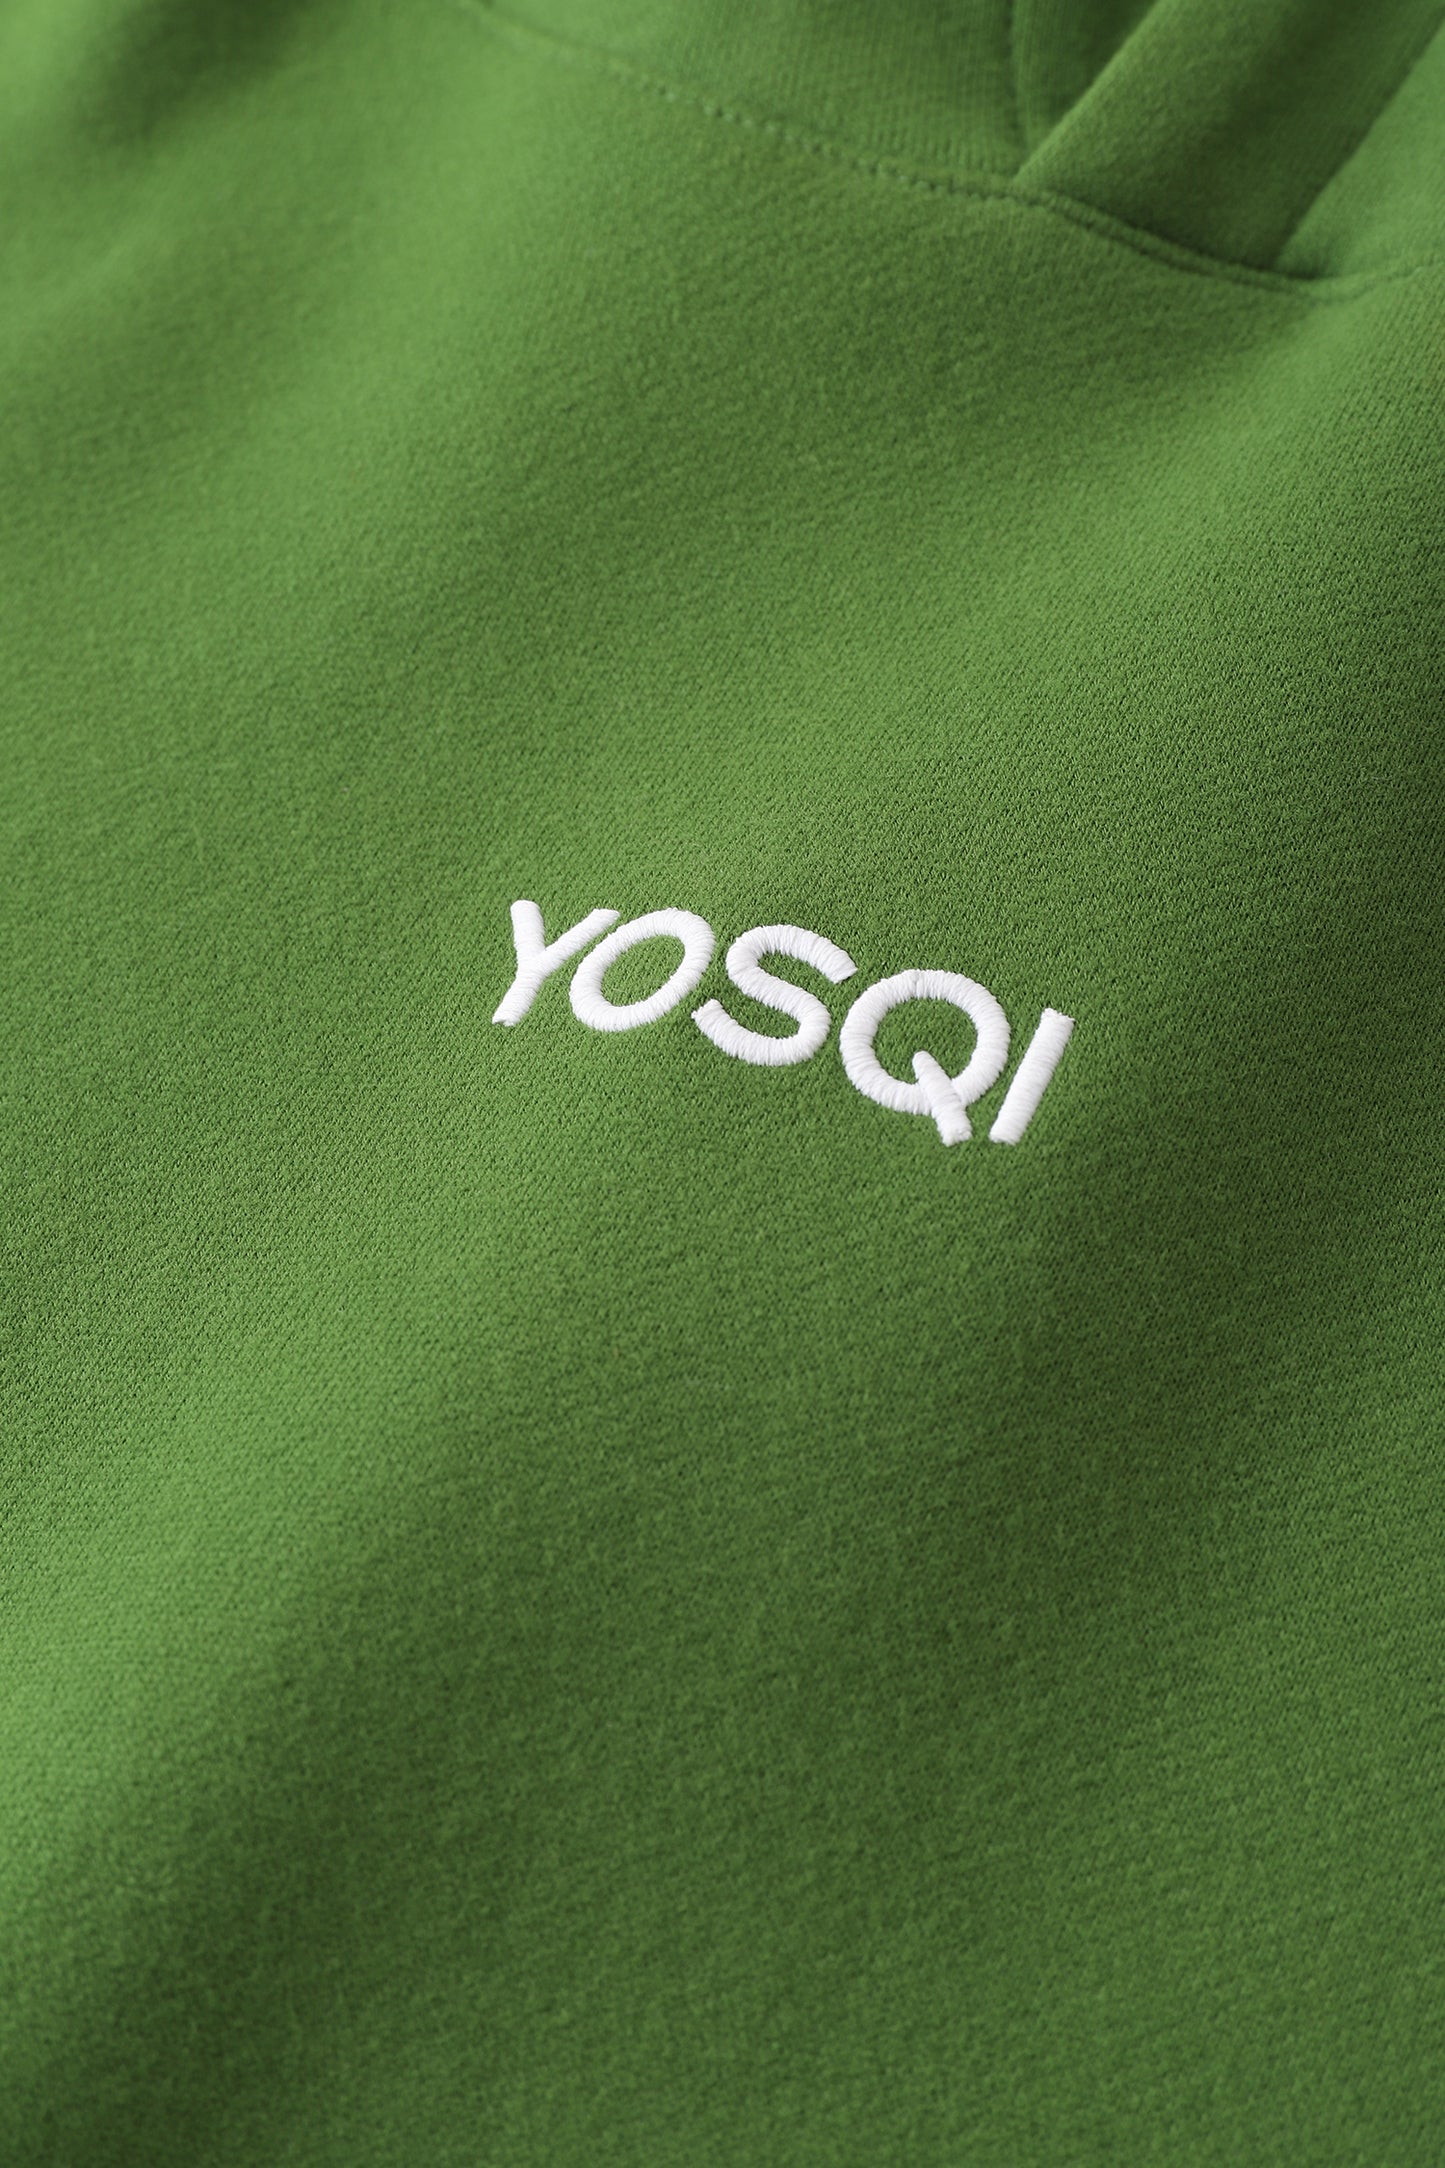 YOSQI Hidden Face Oversized Hoodie- Green